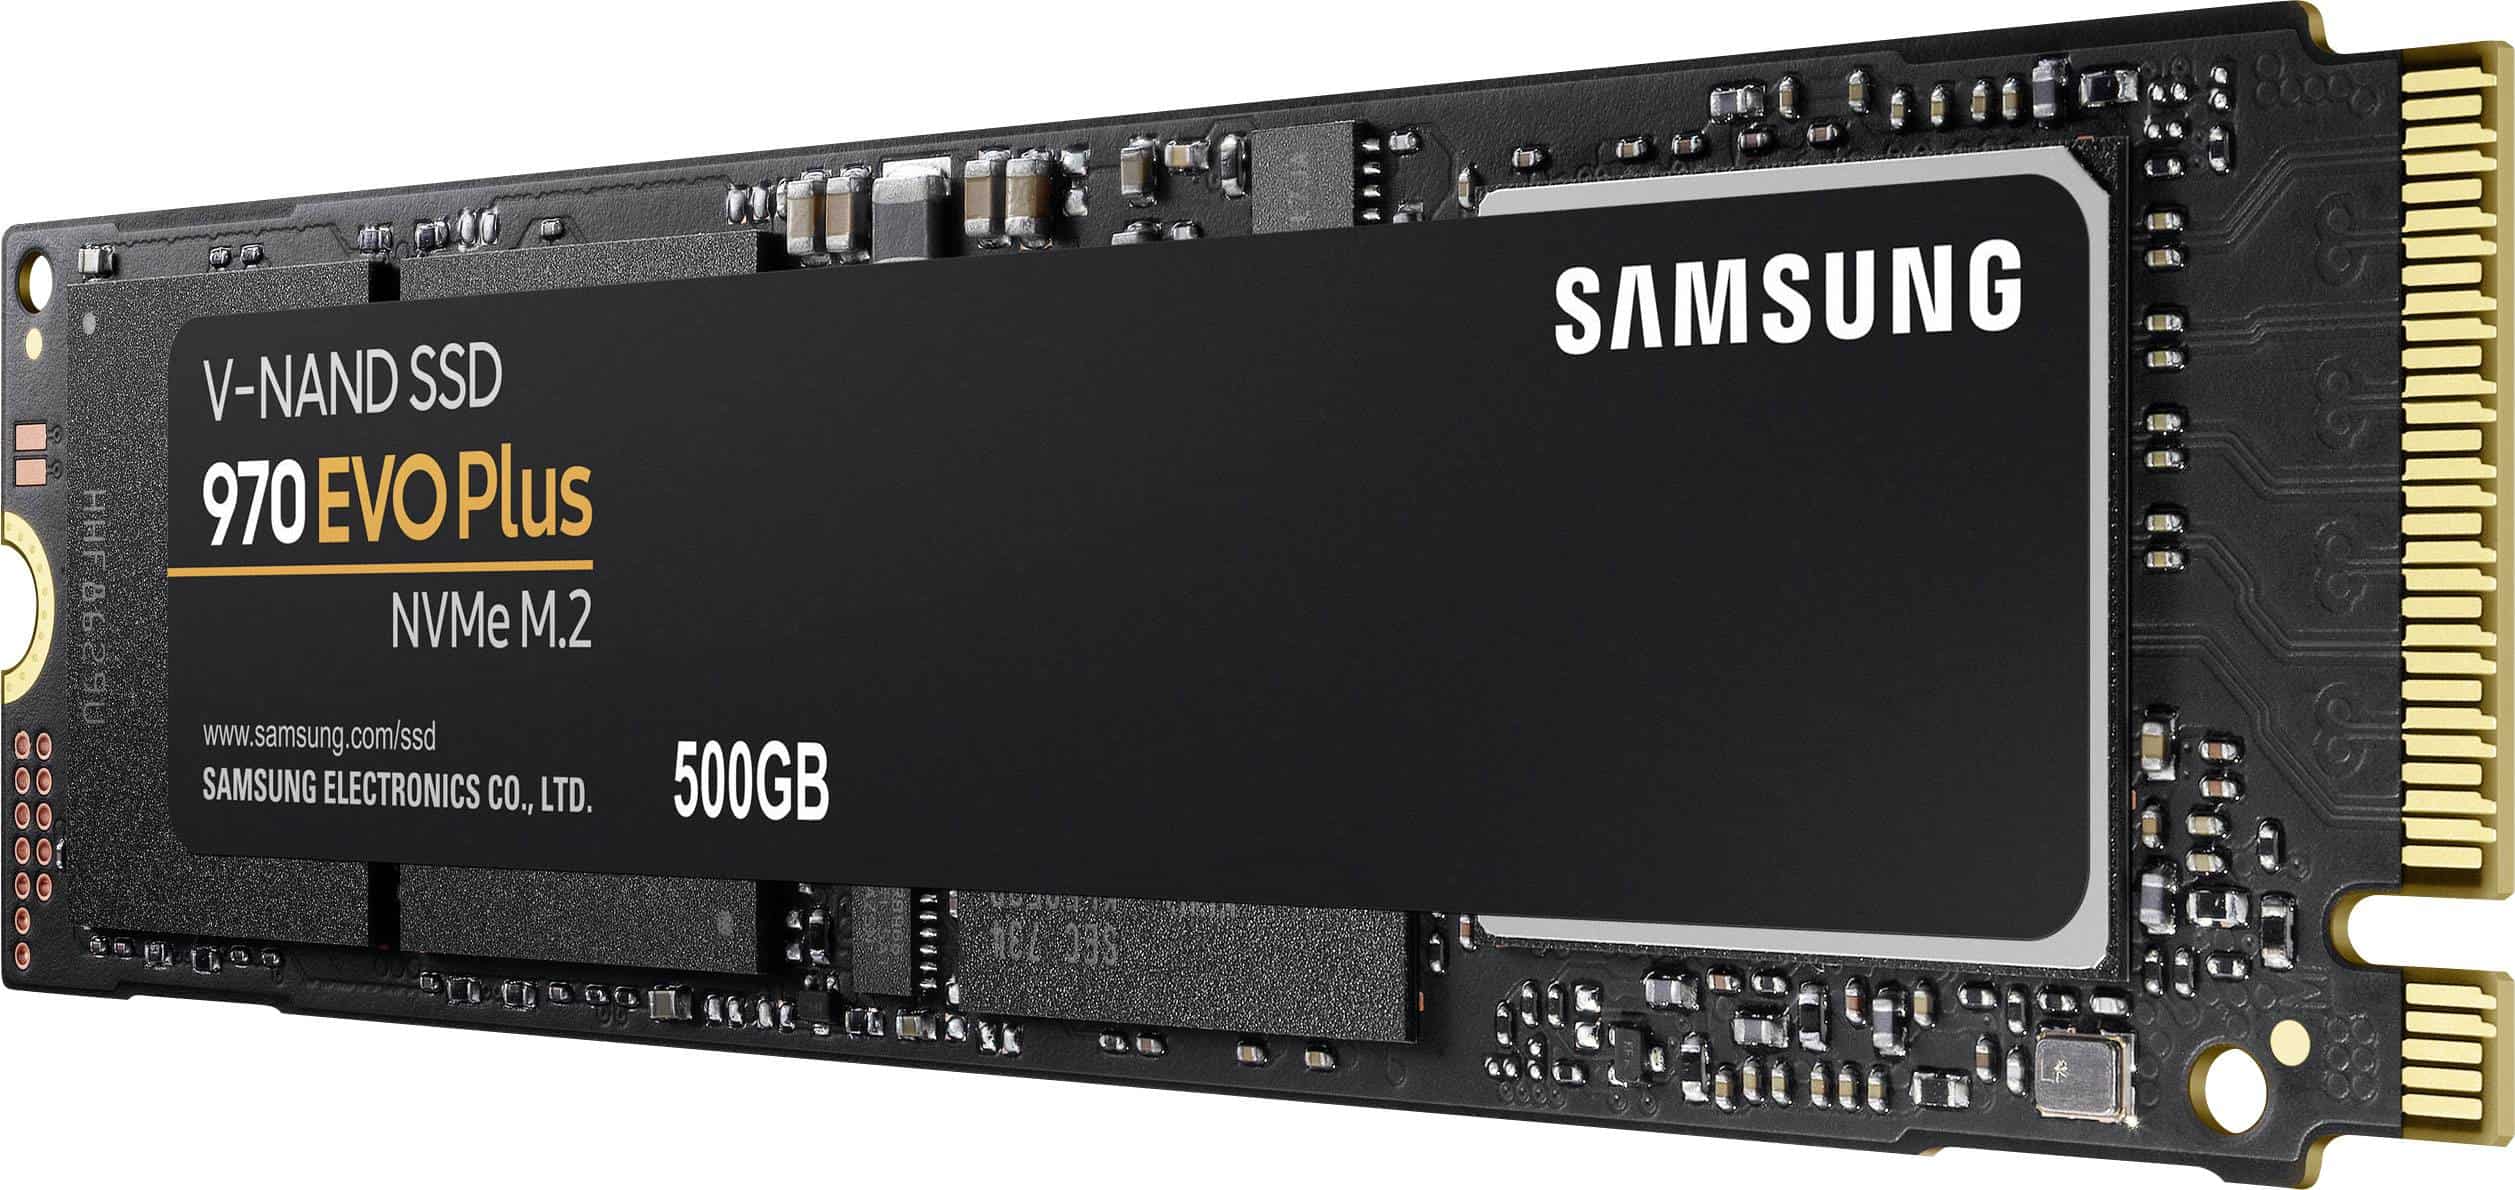 Samsung 970 EVO Plus SSD product